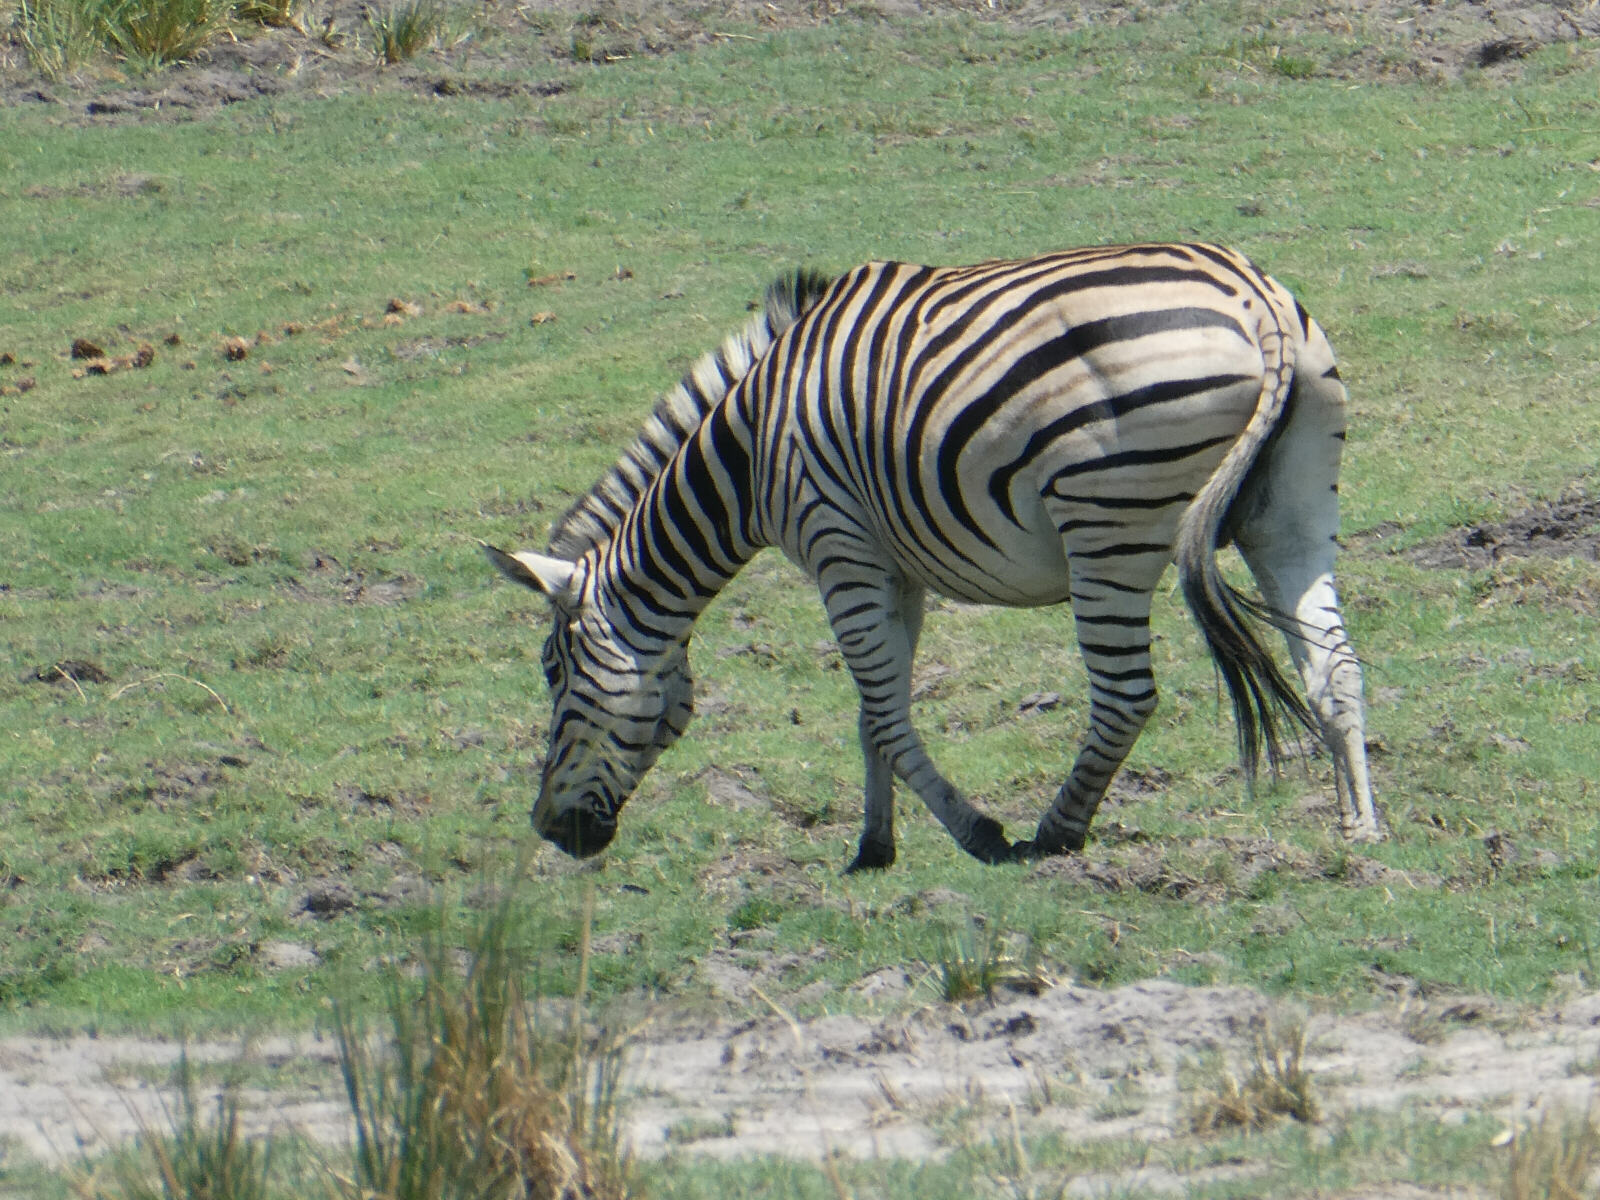 A zebra in Chobe national park, Botswana